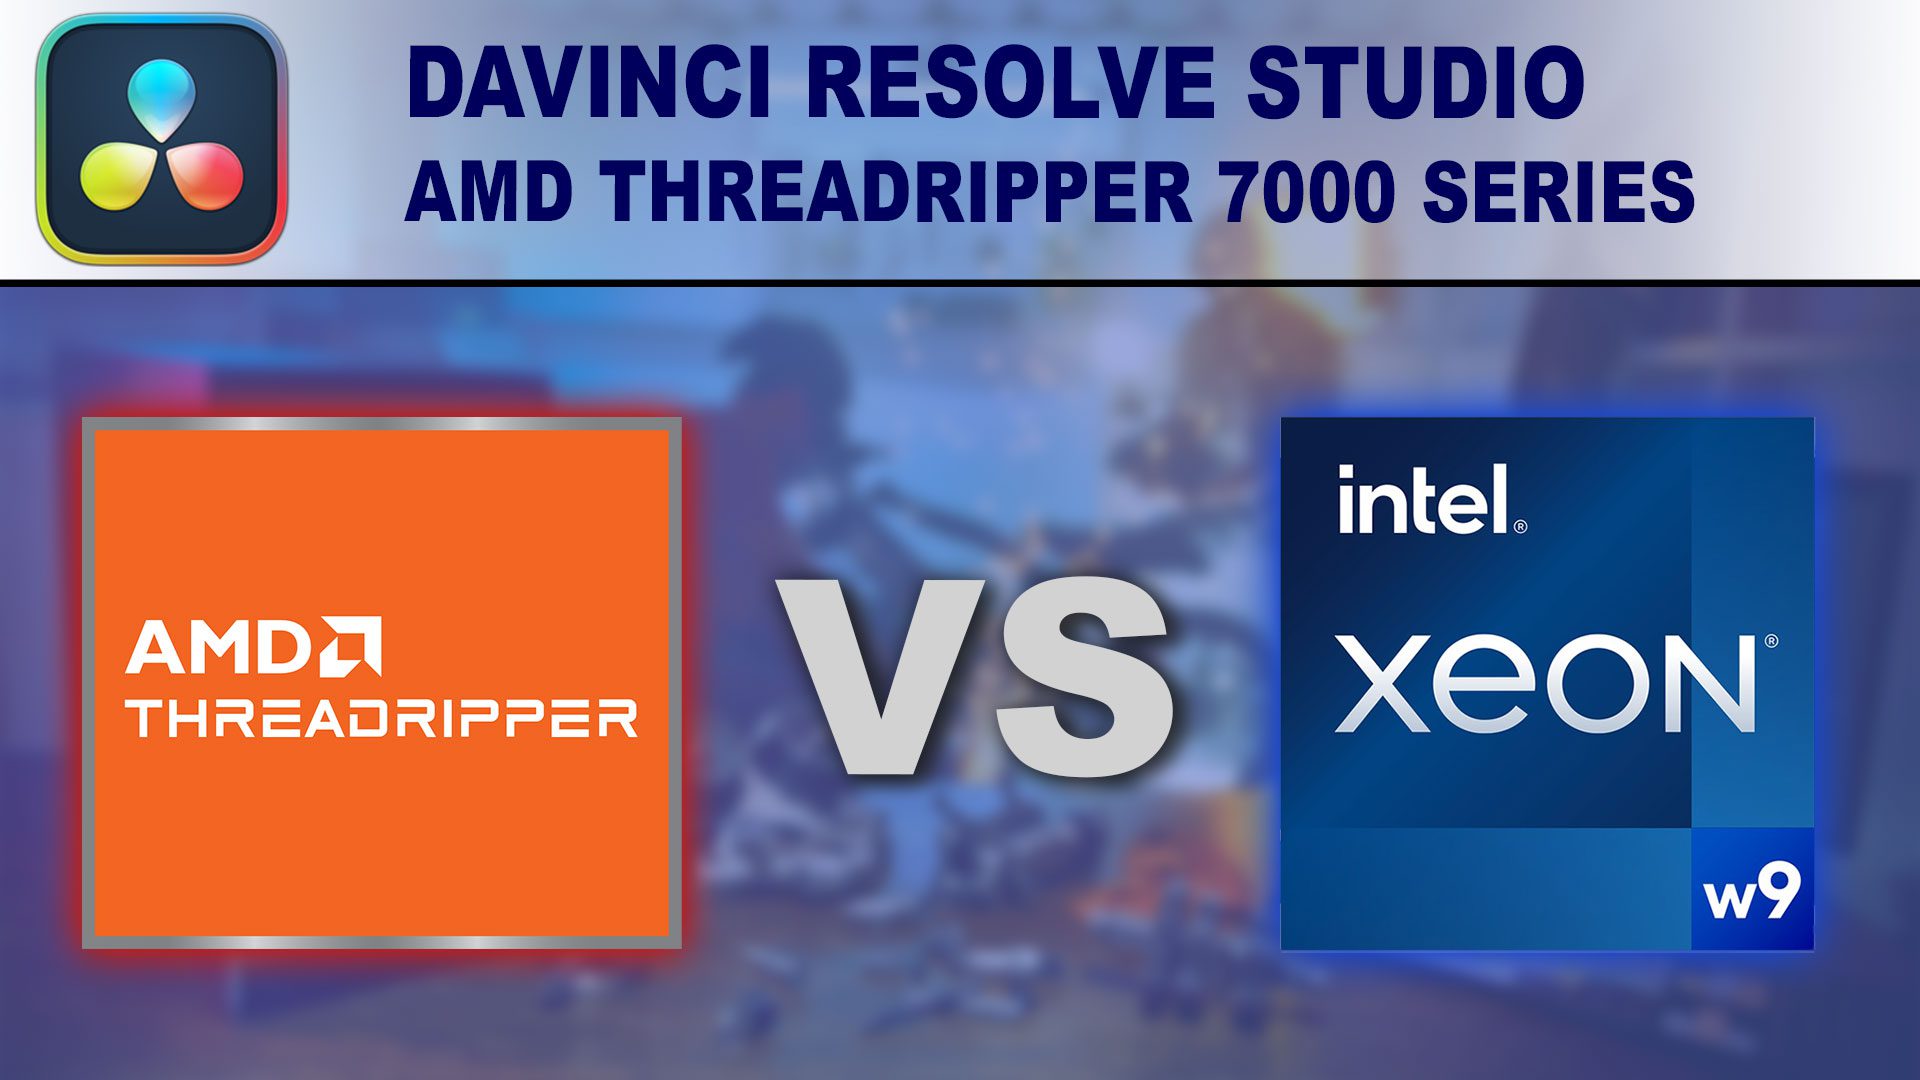 Decorative Image: DaVinci Resolve - AMD Threadripper vs Intel Xeon